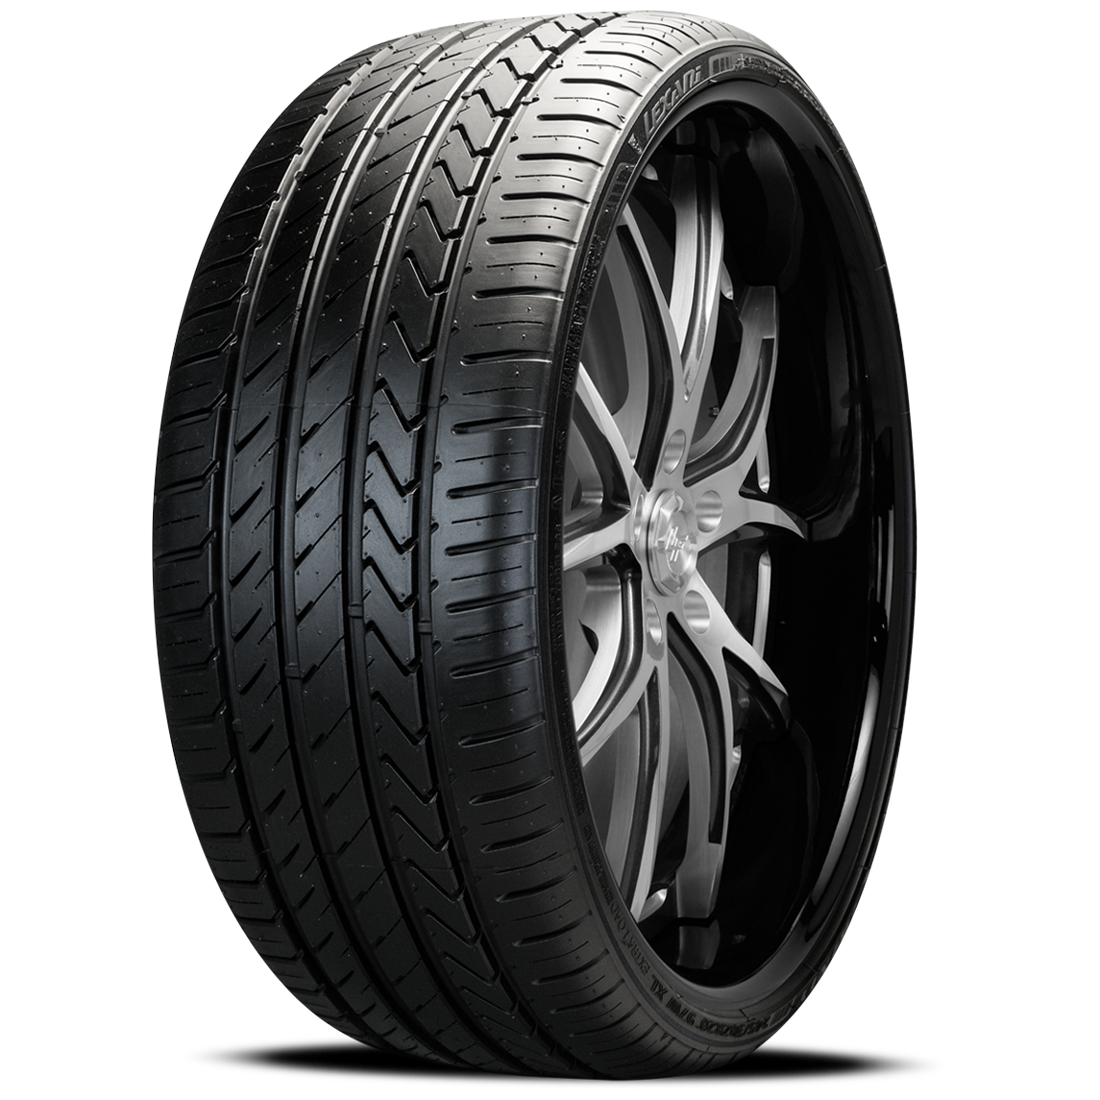 LEXANI LX-TWENTY 225/35ZR19 (25.2X9.1R 19) Tires